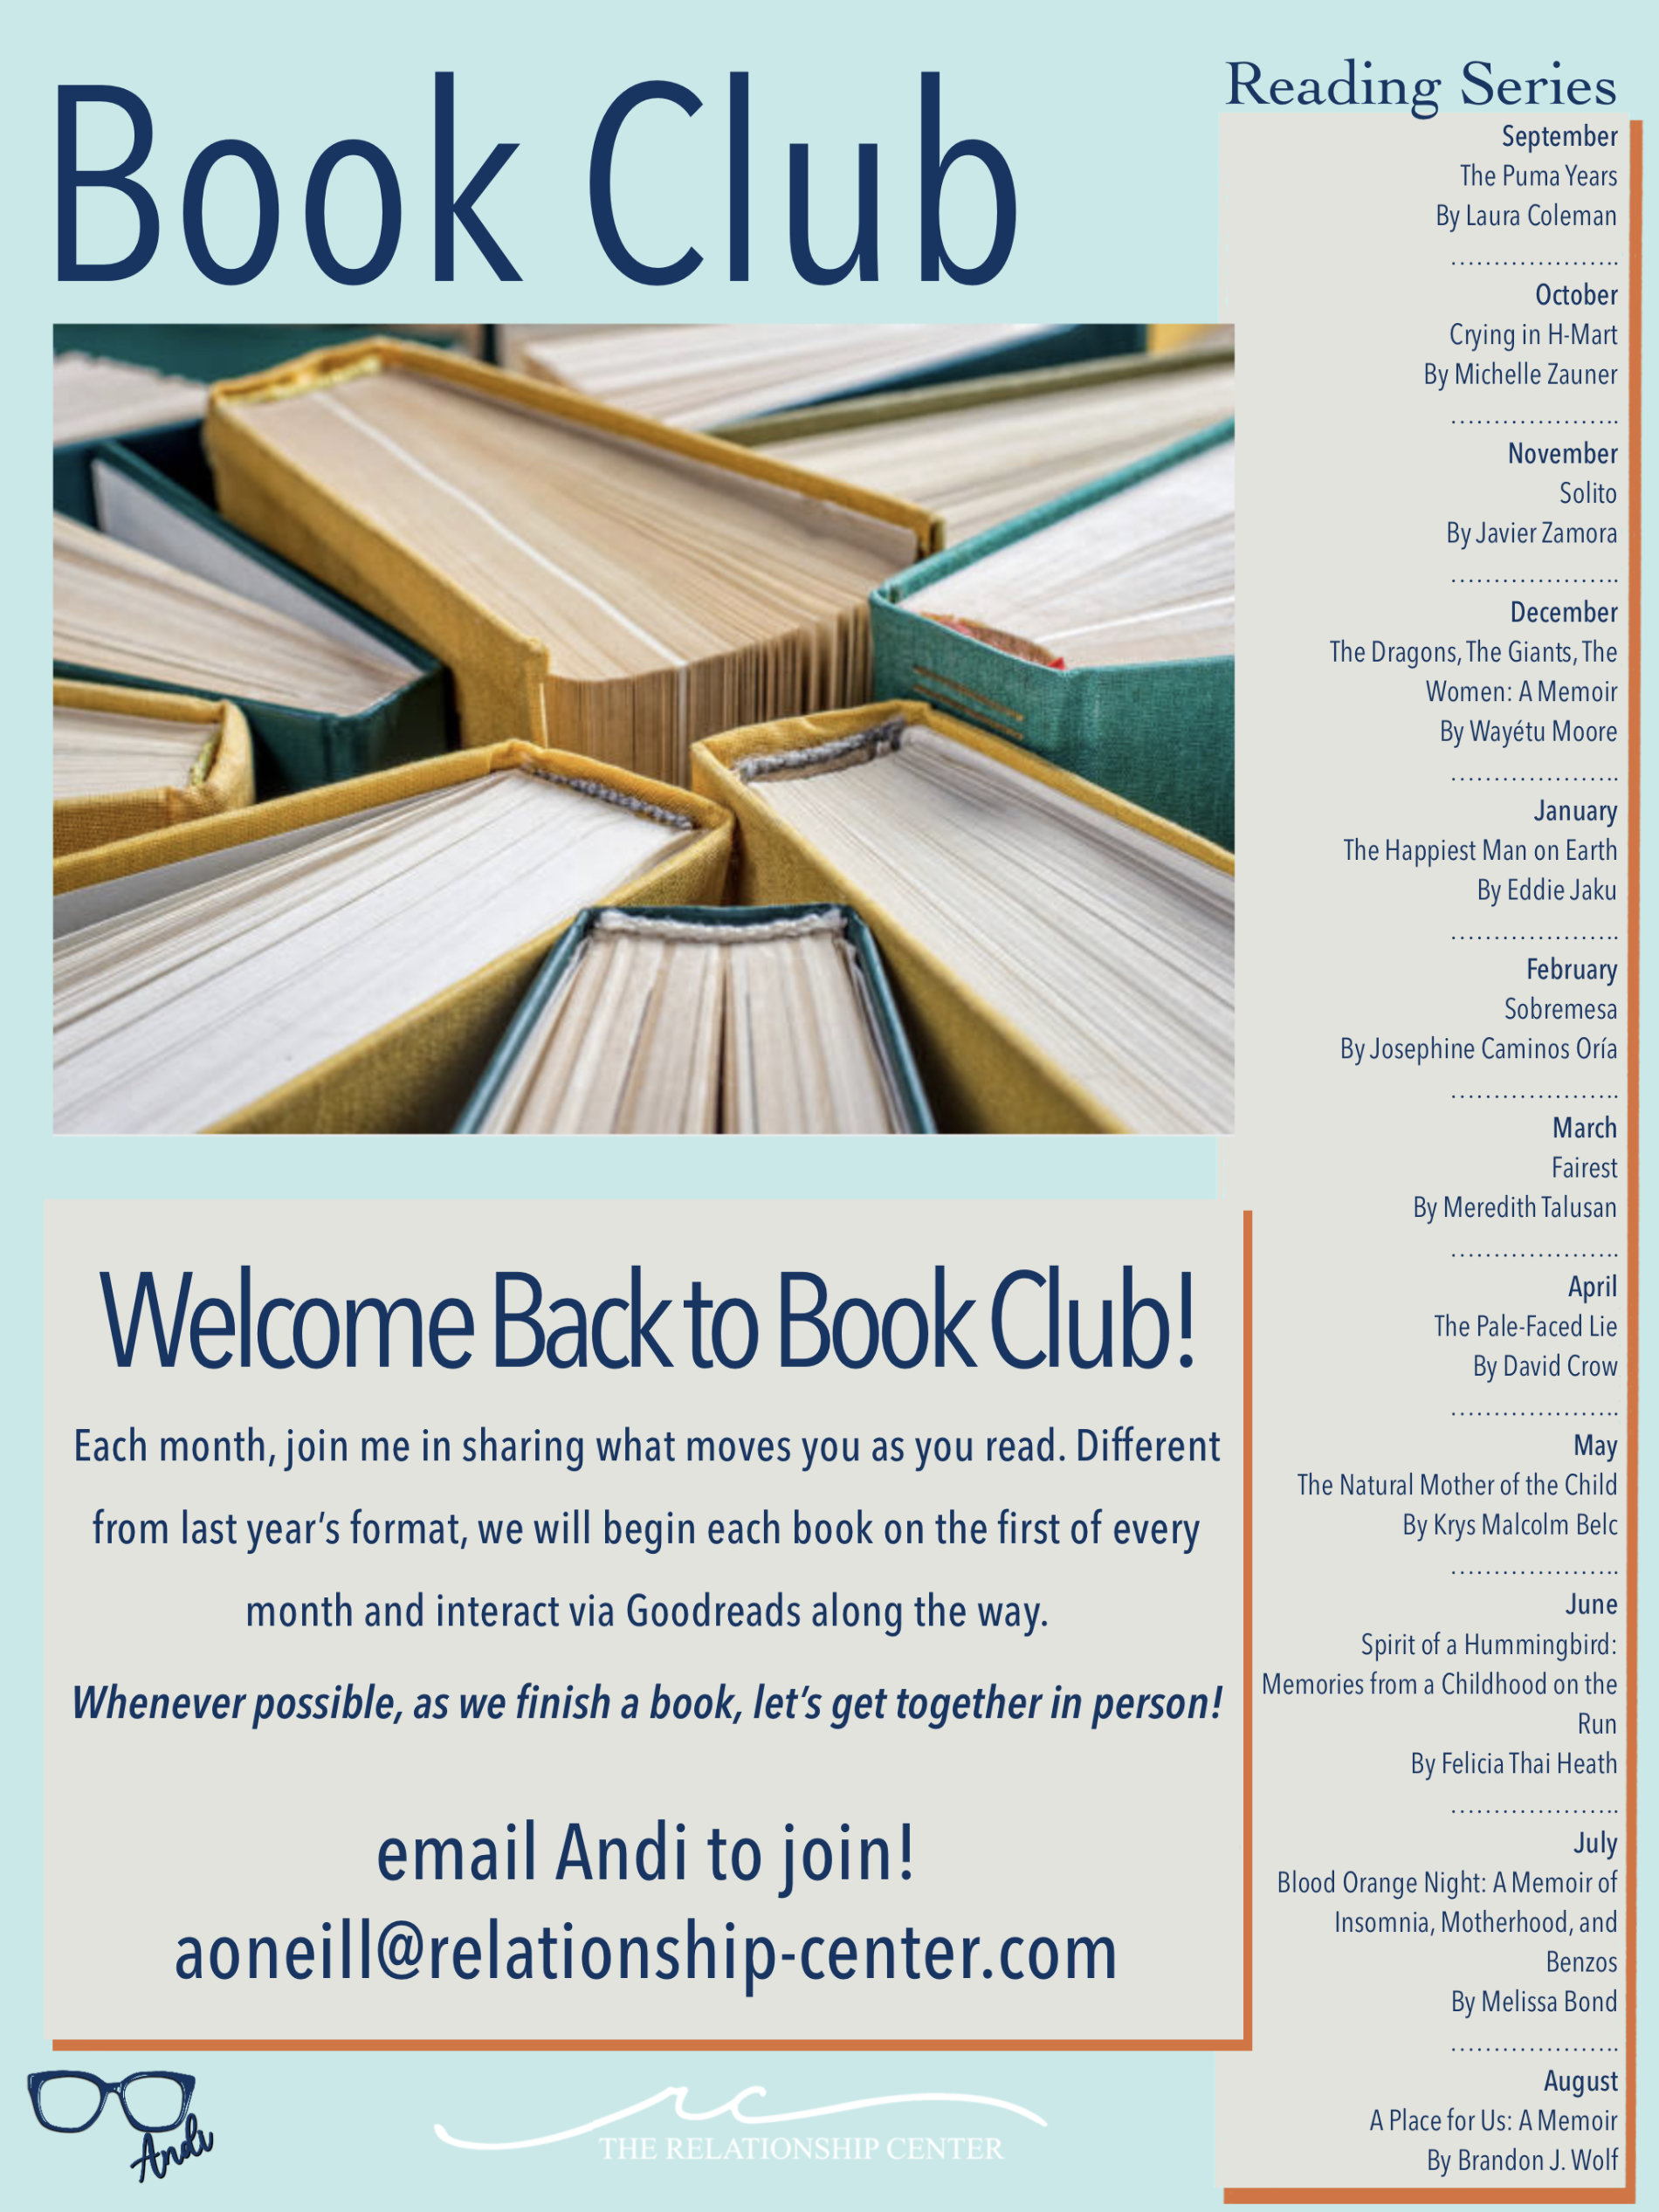 Book list for book club